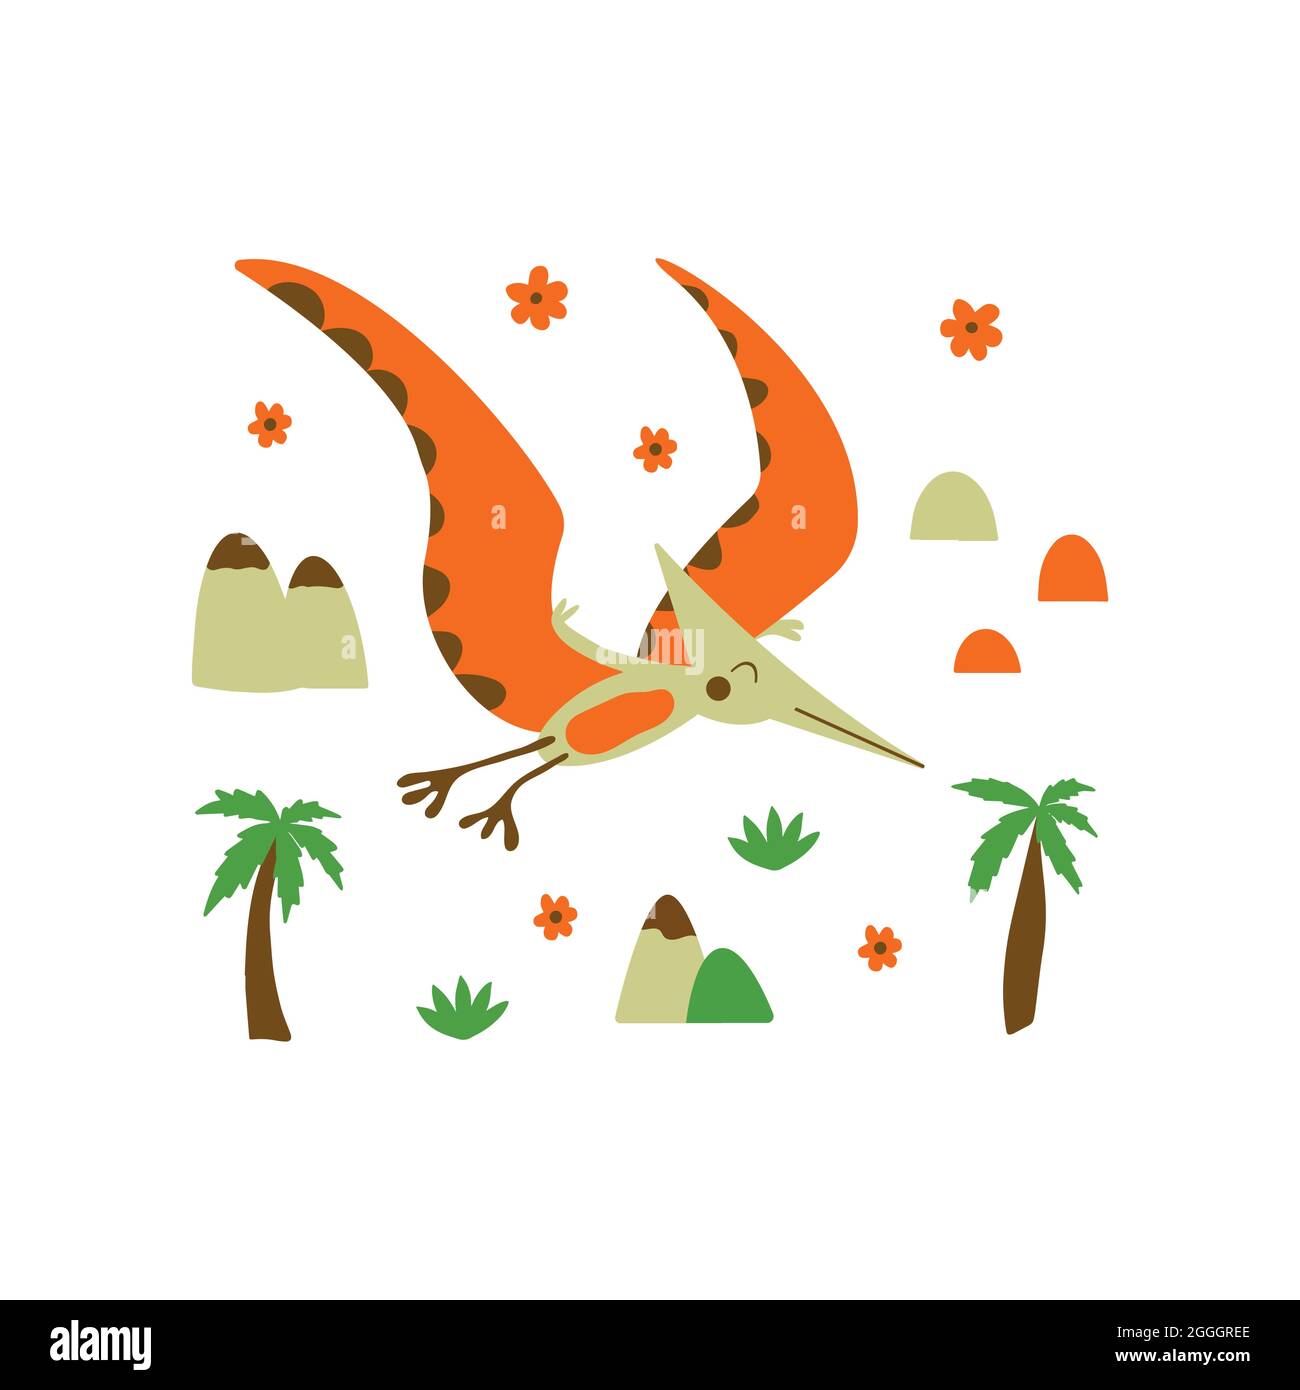 Pterodactyl Poster